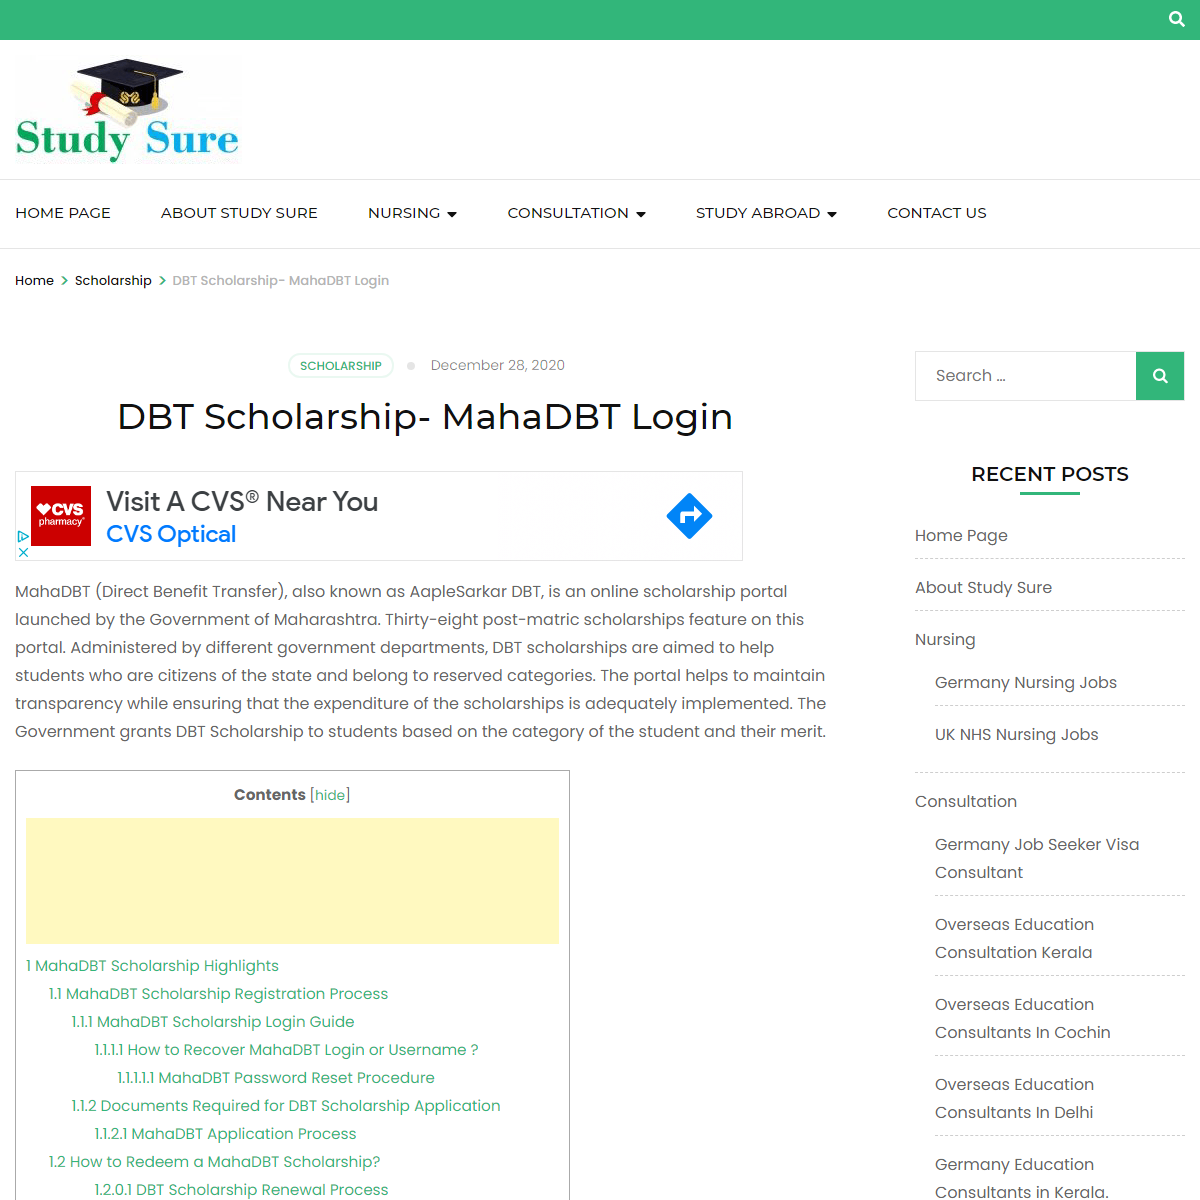 A complete backup of https://www.studysure.in/dbt-scholarship-mahadbt-login/